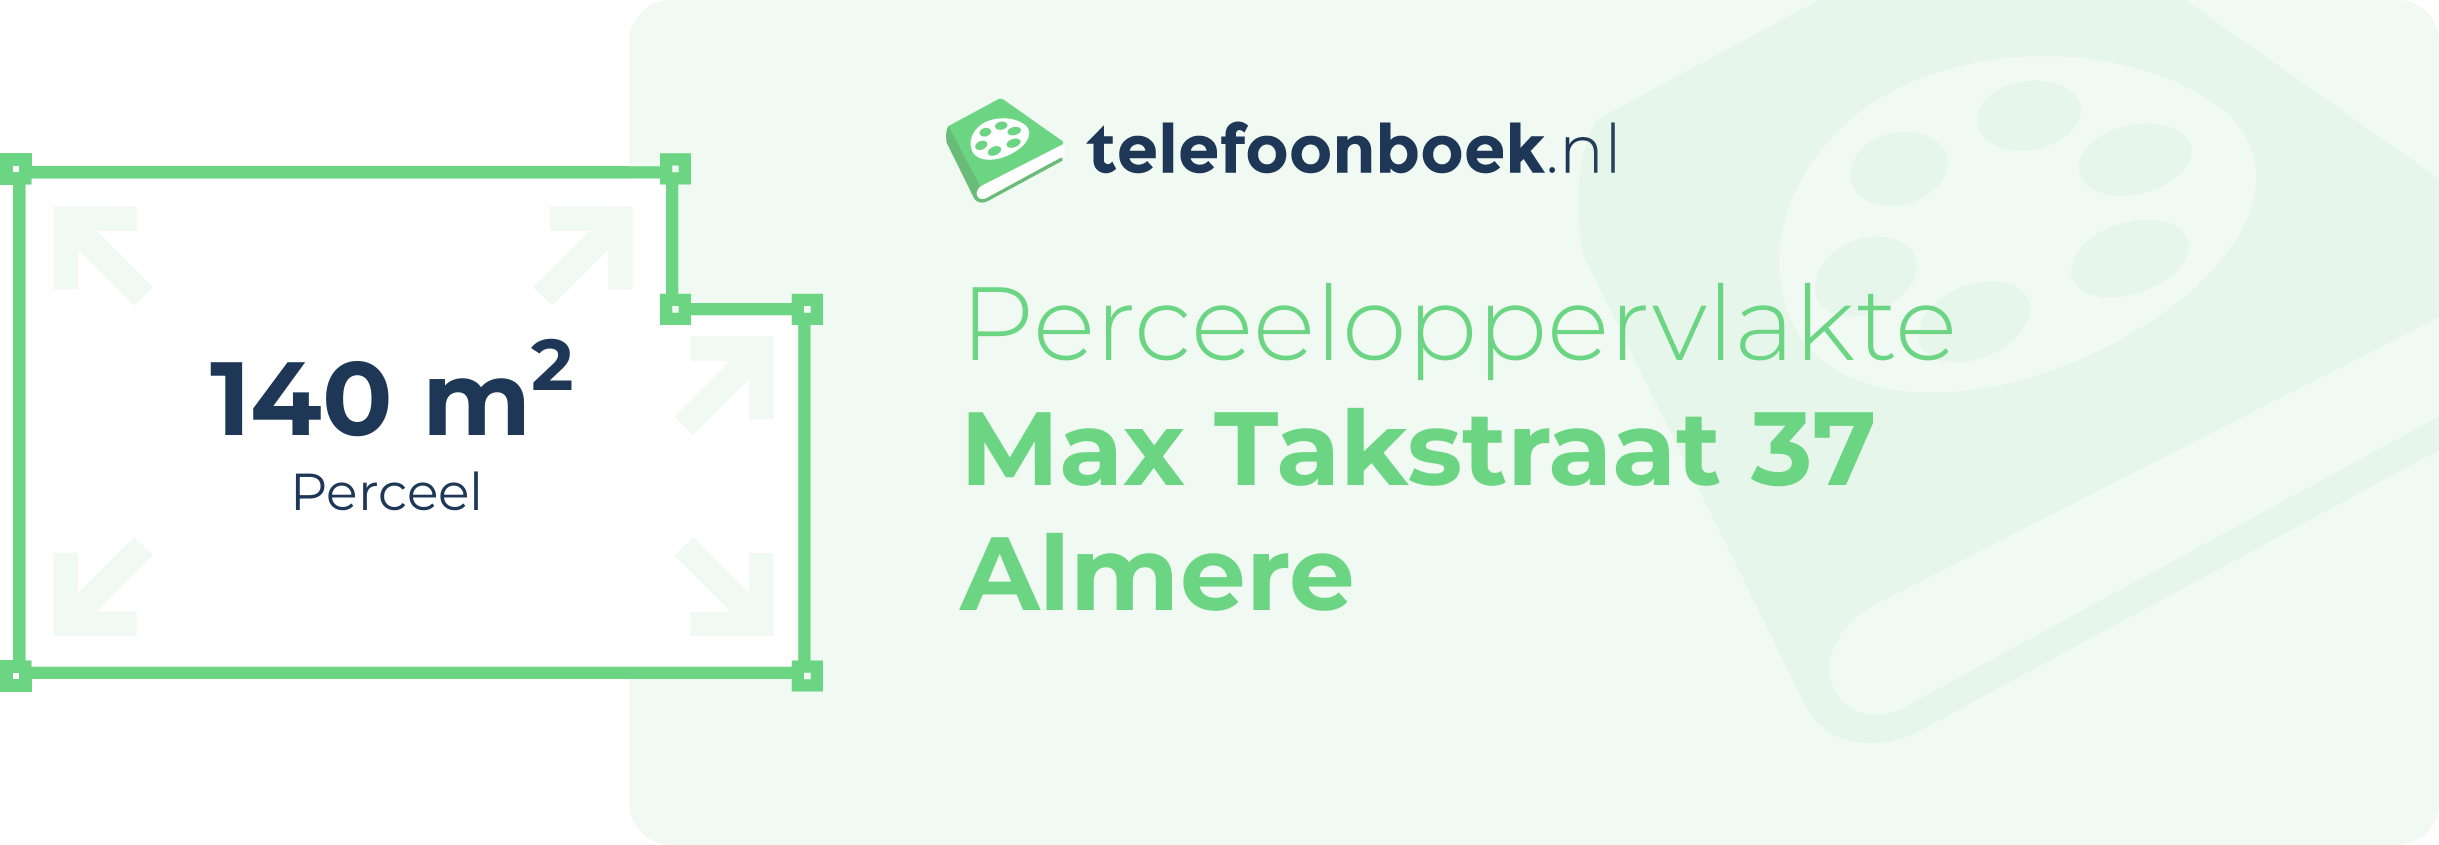 Perceeloppervlakte Max Takstraat 37 Almere